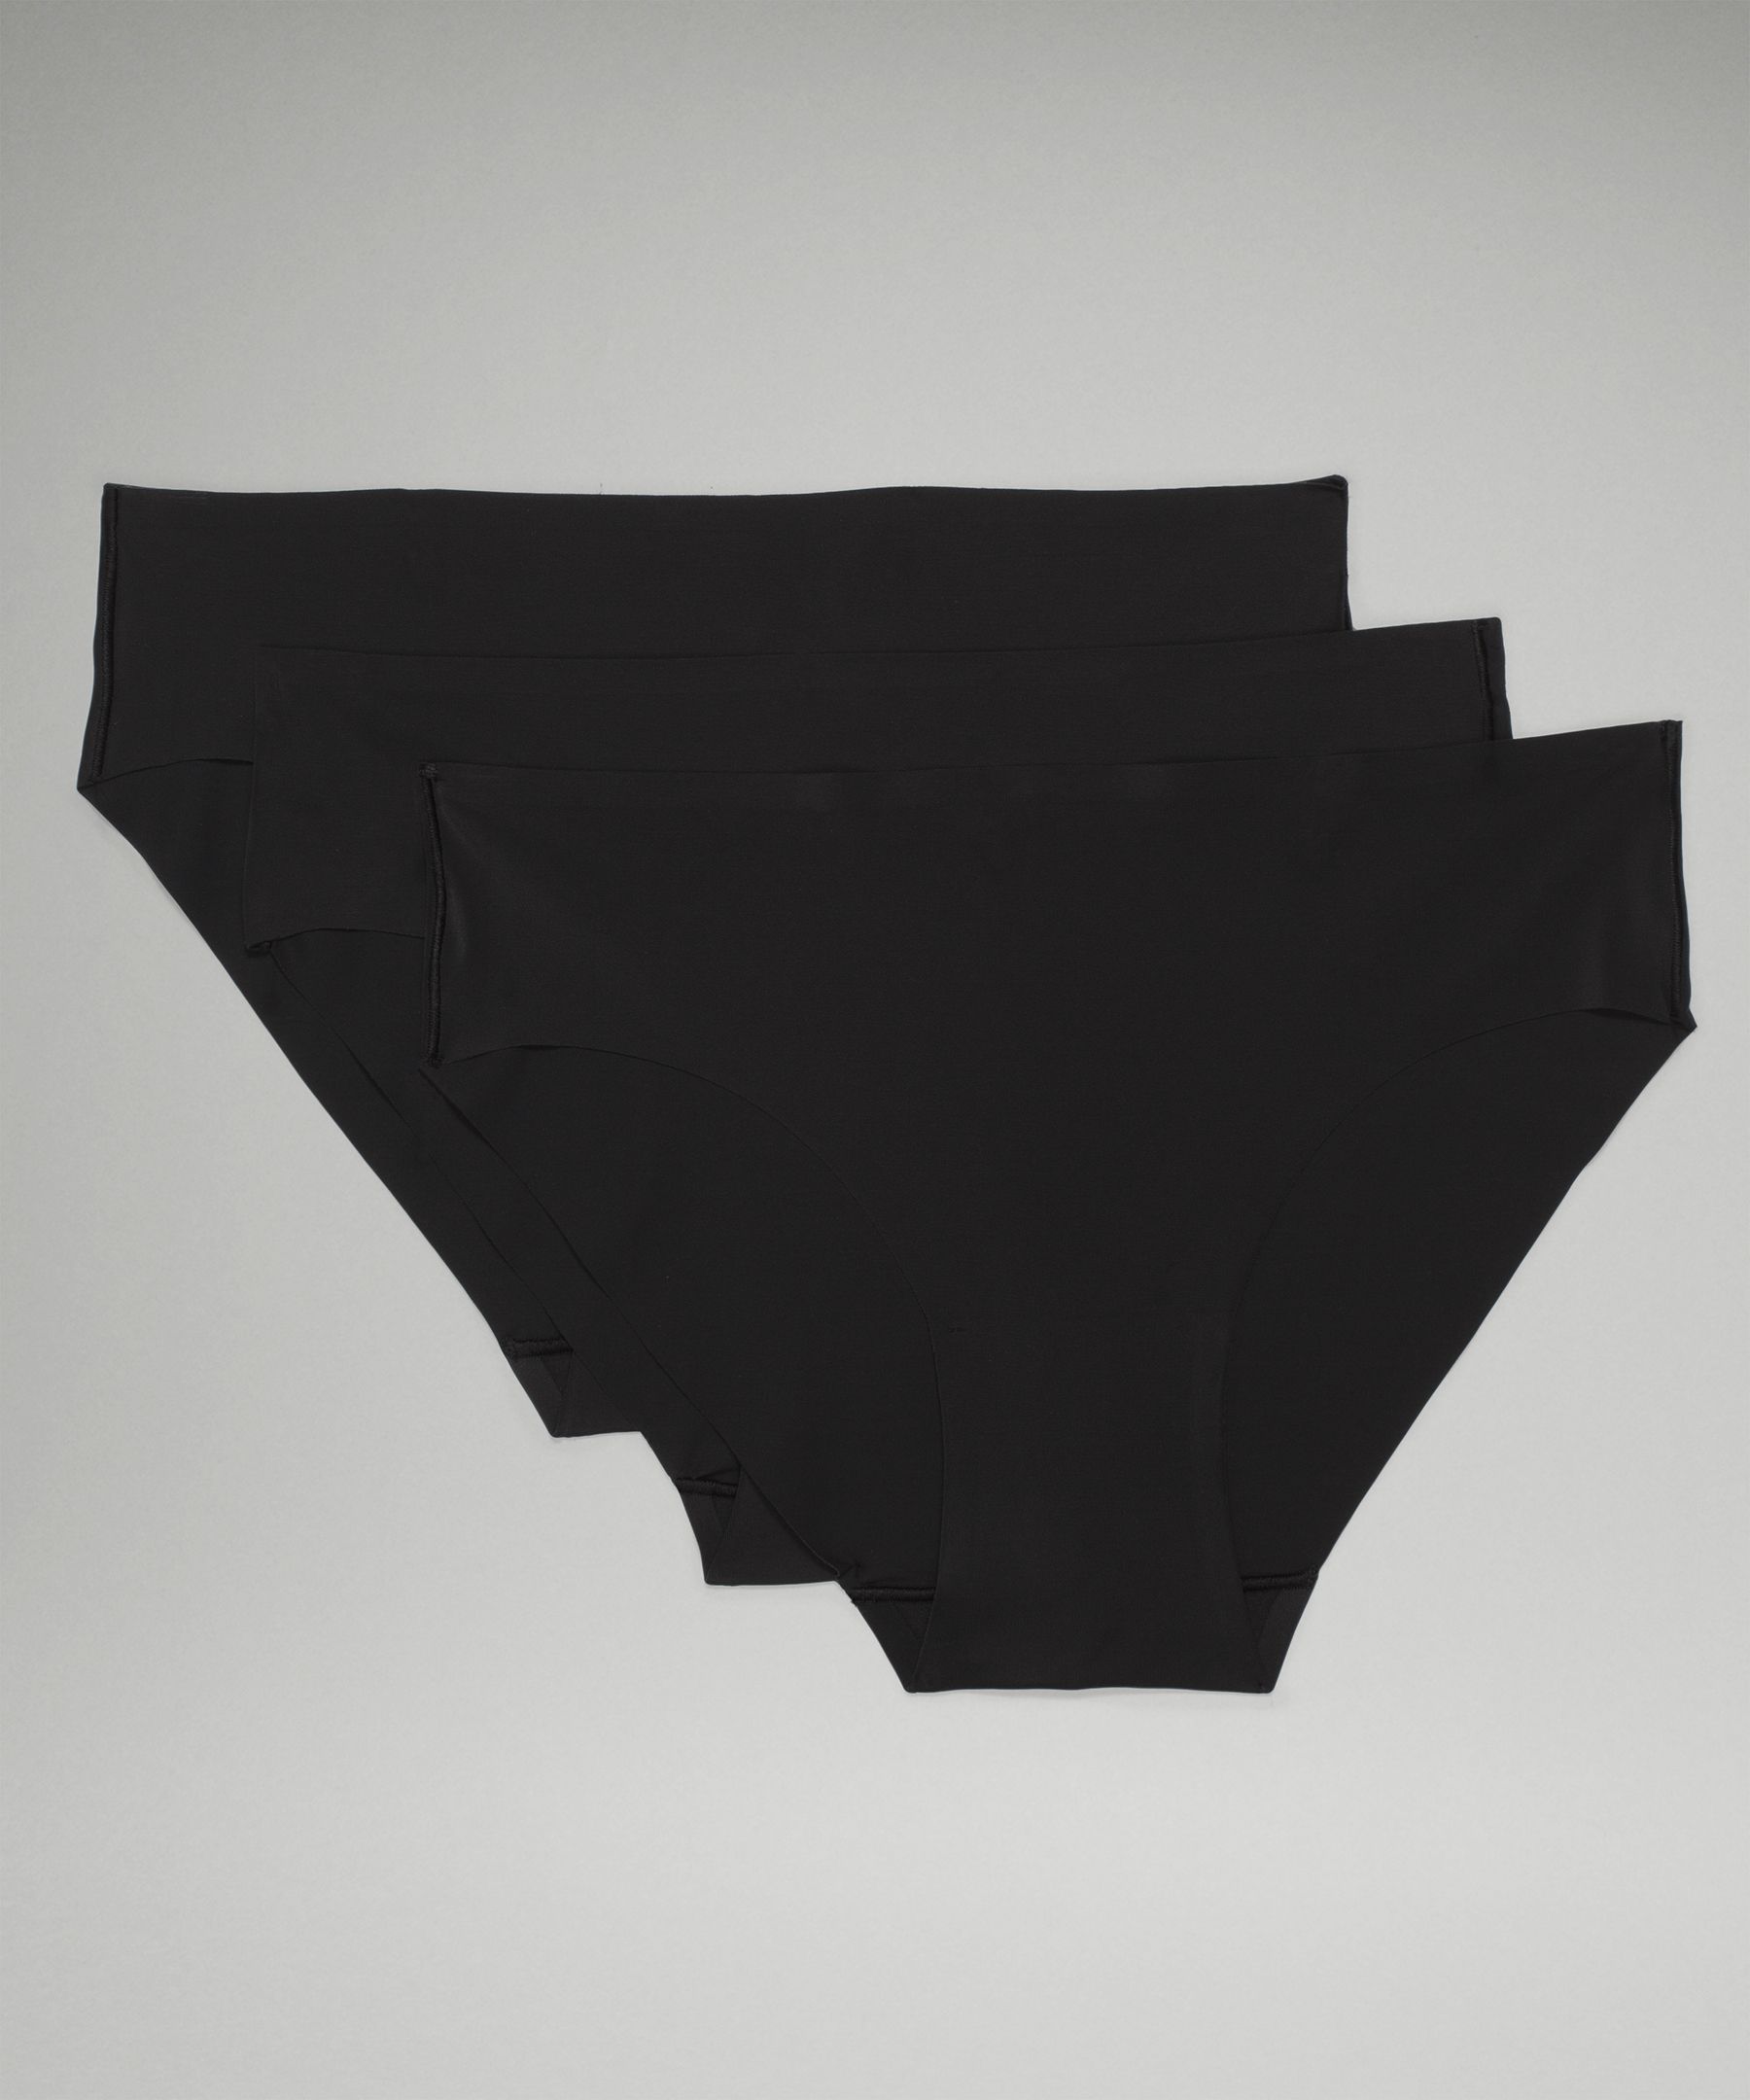 Lululemon Ladies Underwear Mula Bandhawear Bikini (Size M 6/8) RRP £18